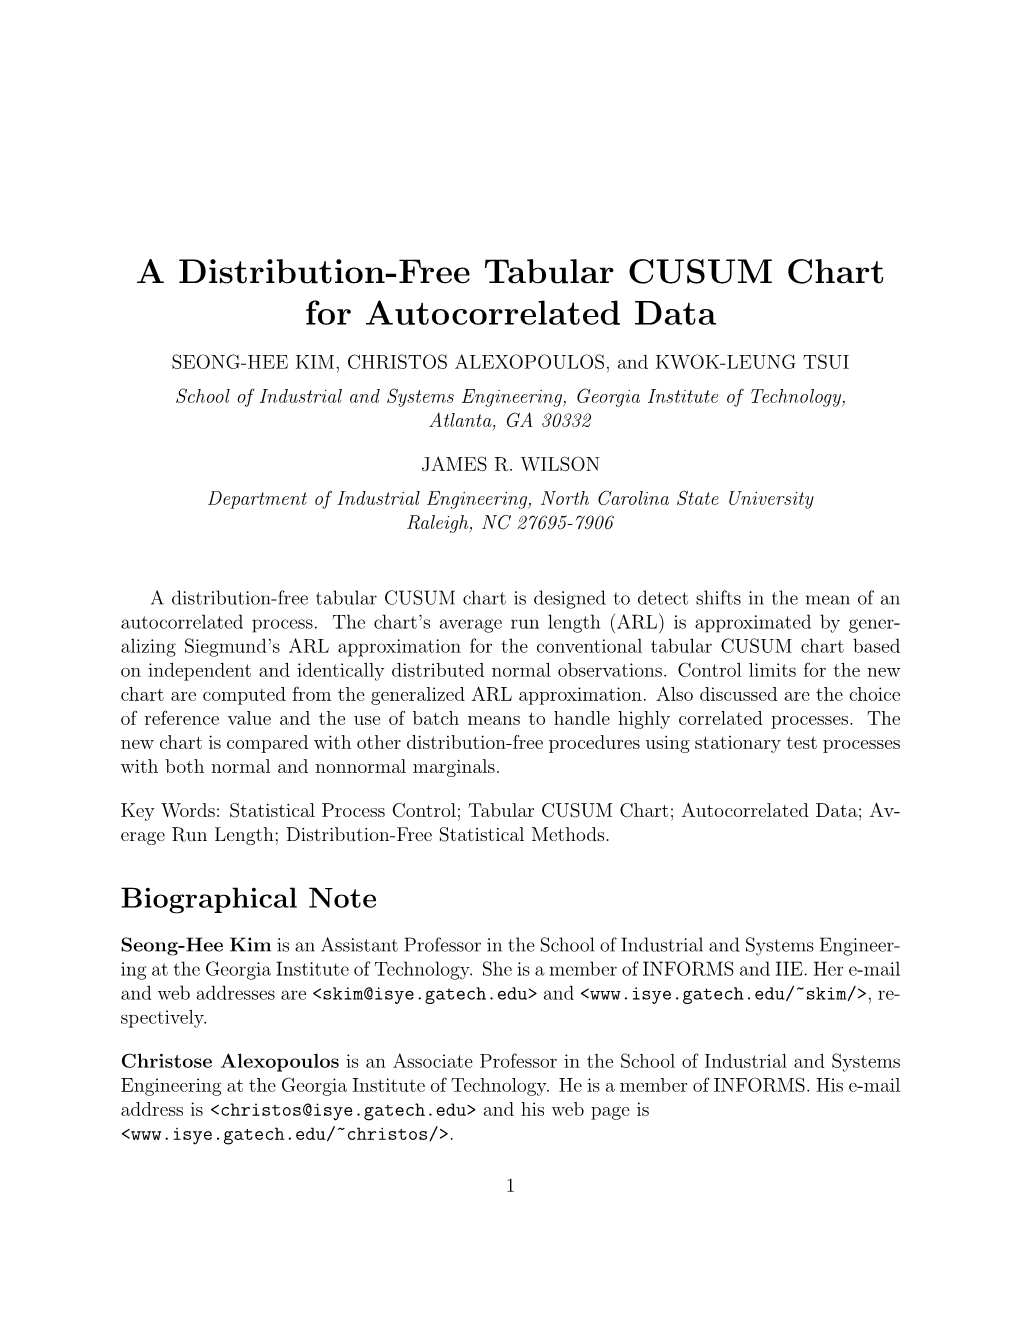 A Distribution-Free Tabular CUSUM Chart for Autocorrelated Data